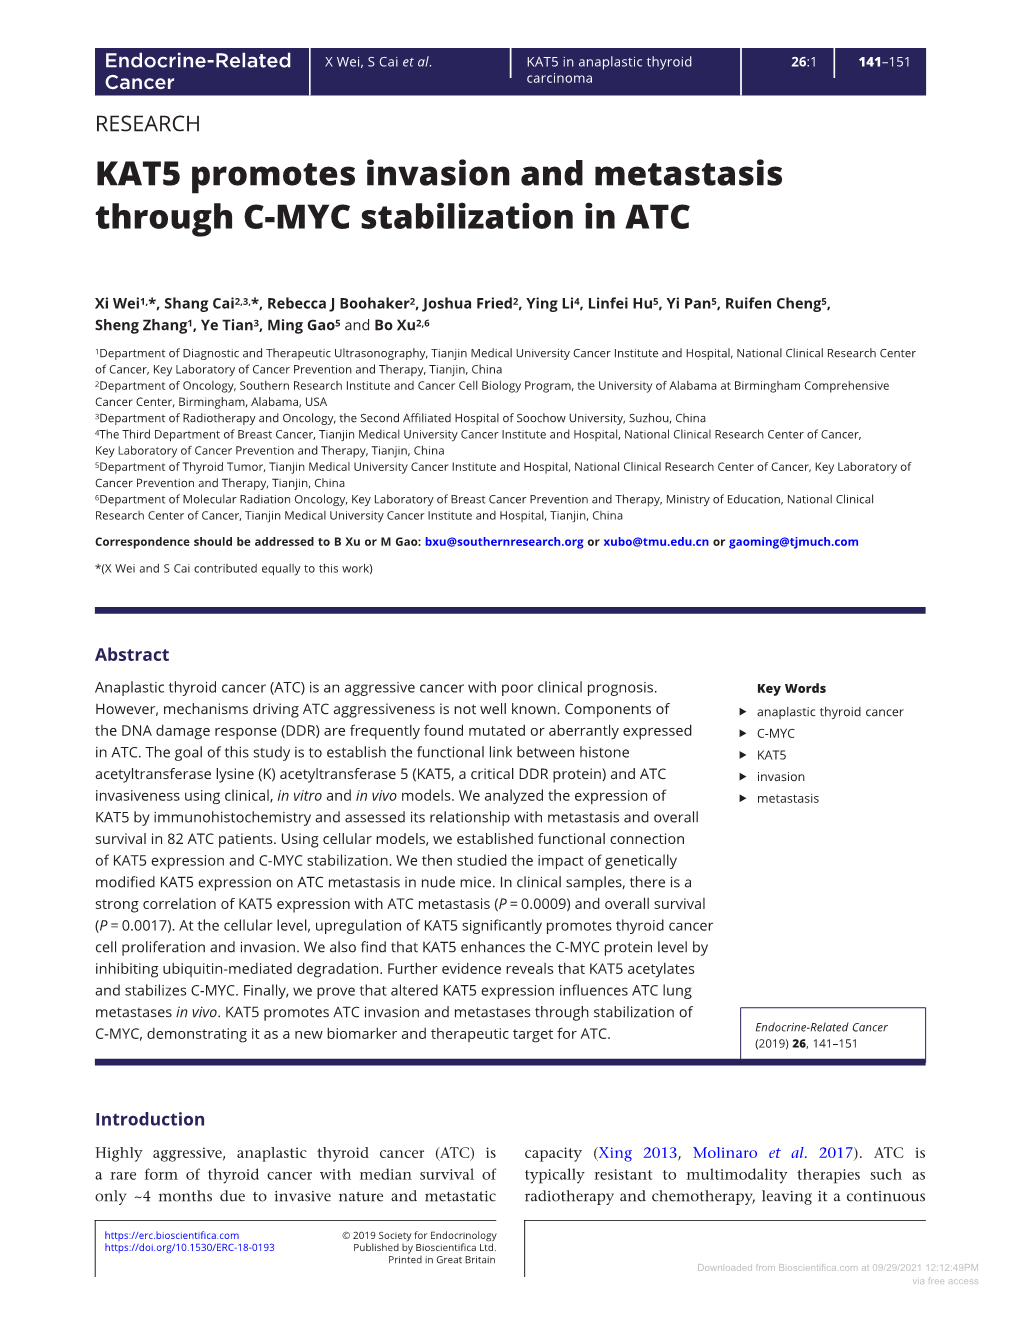 KAT5 Promotes Invasion and Metastasis Through C-MYC Stabilization in ATC